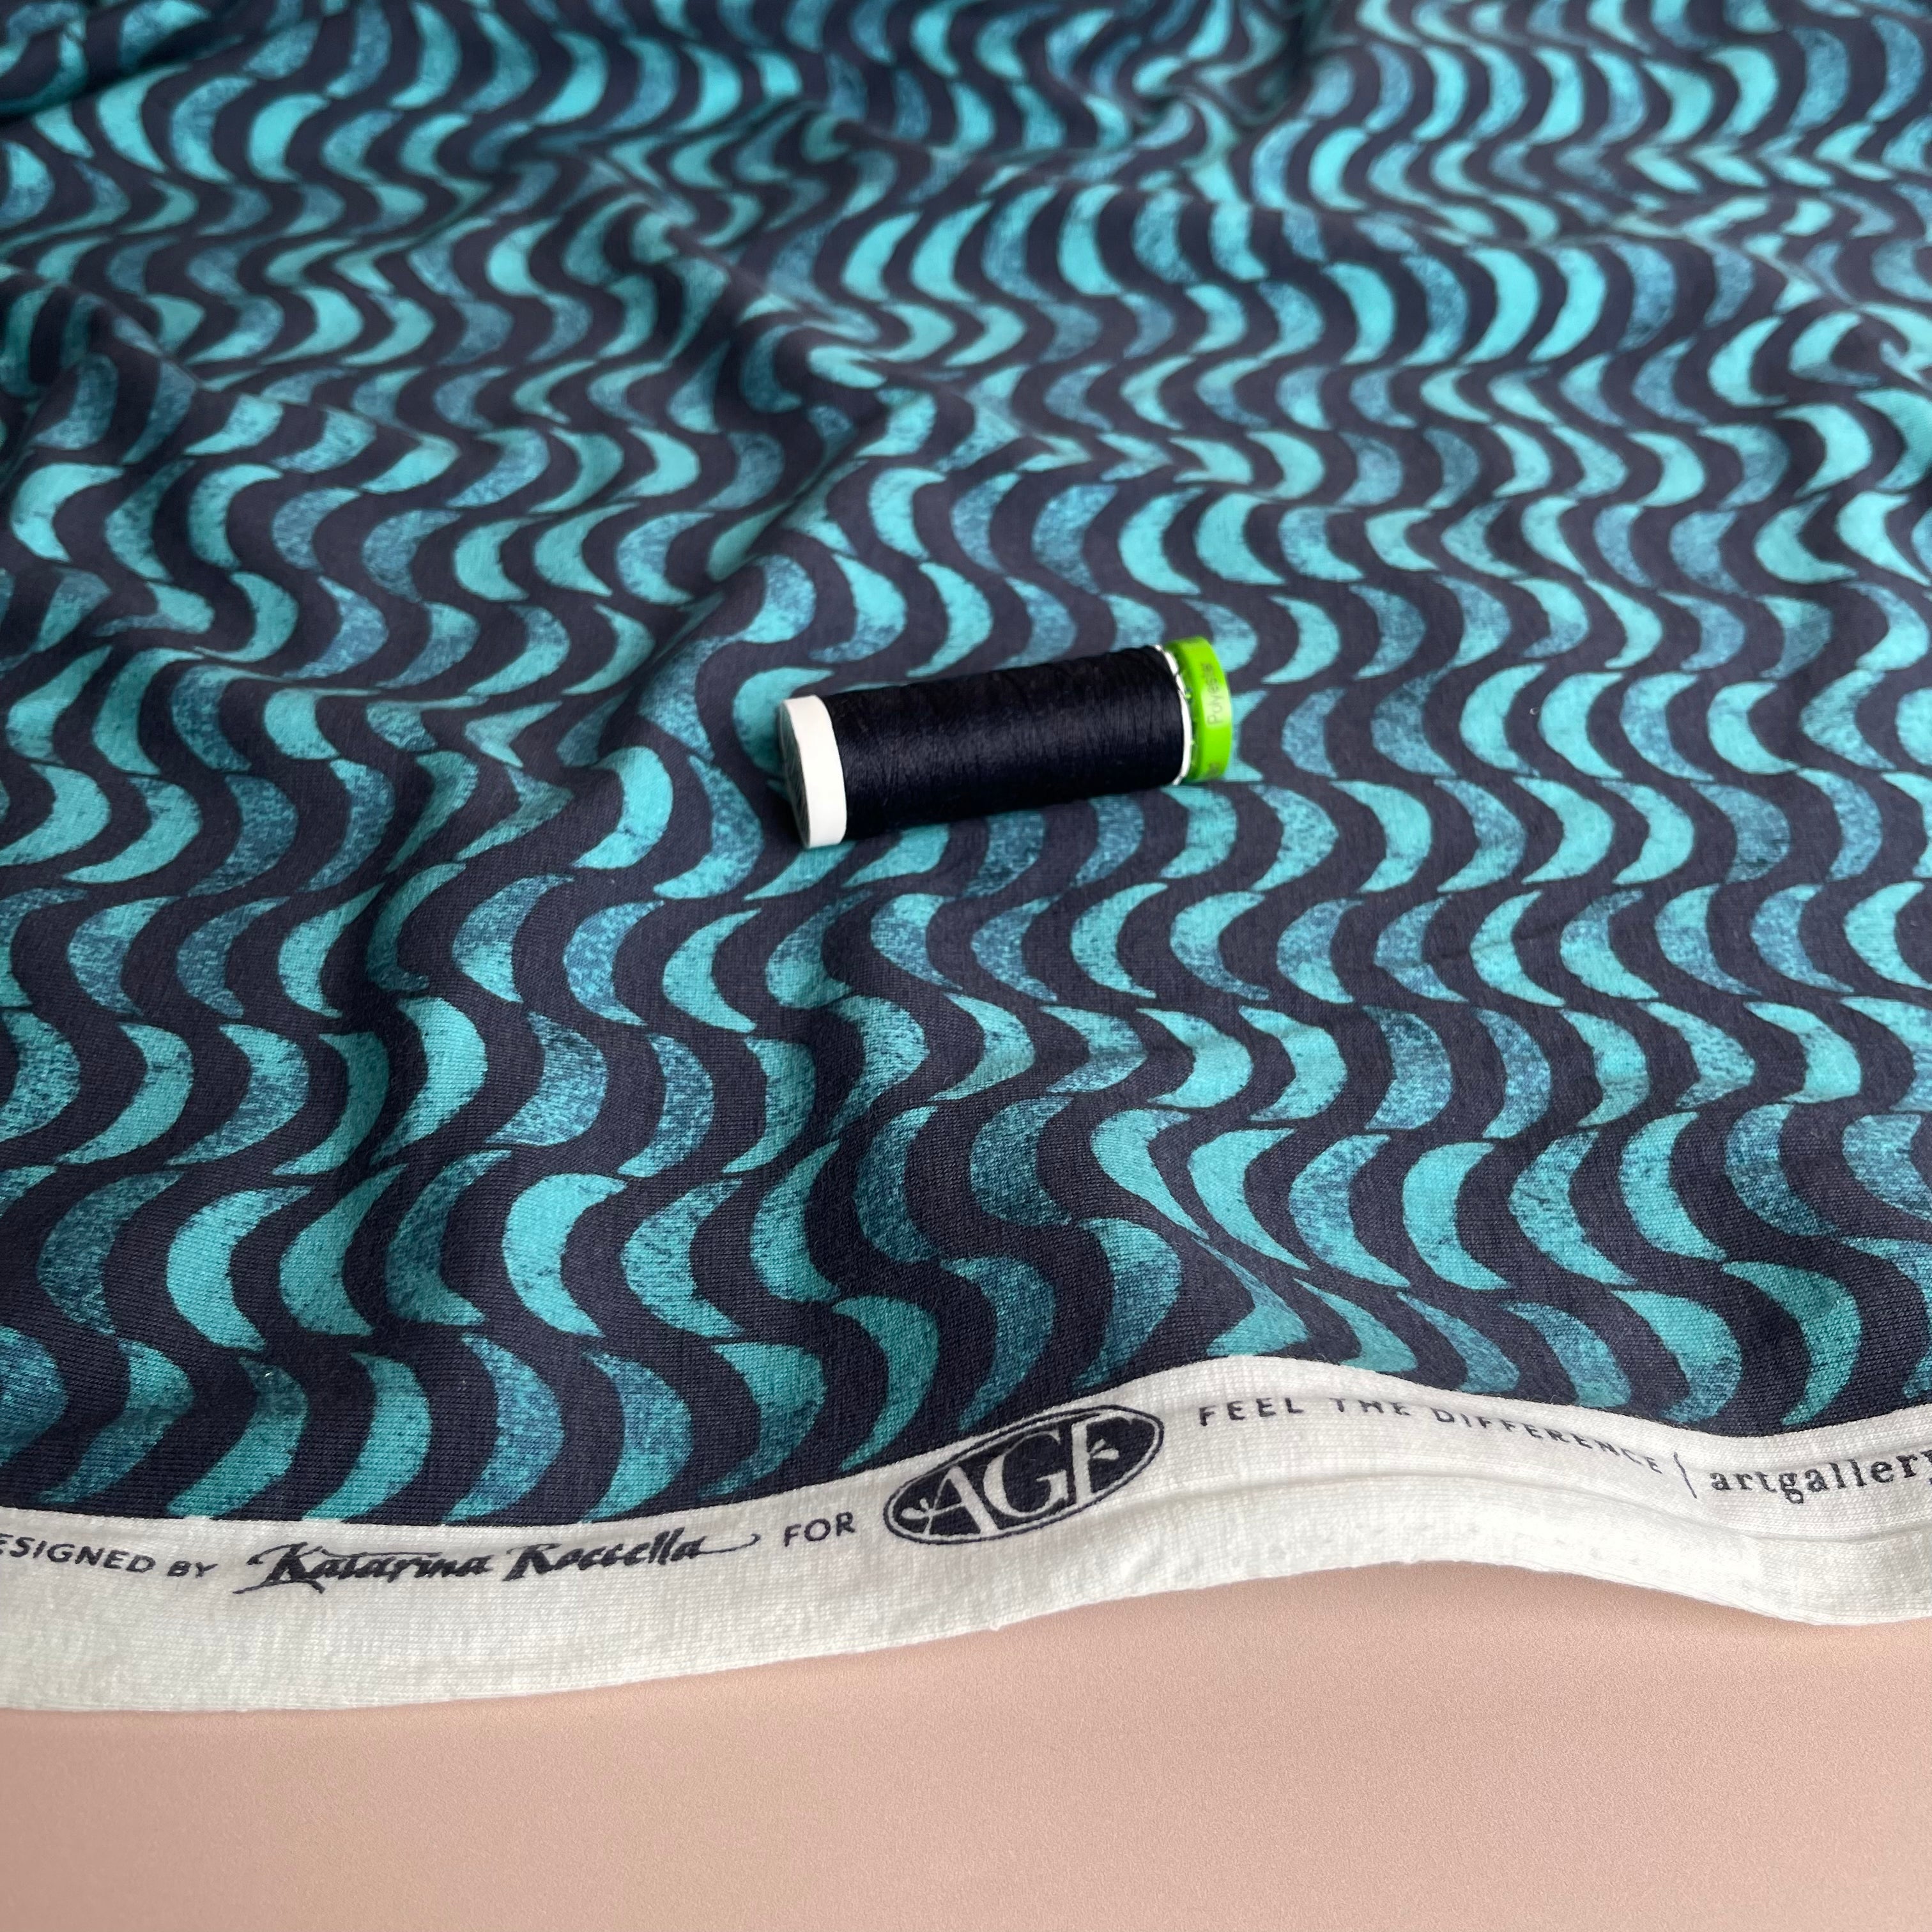 Art Gallery Fabrics - Gentle Draft Moonrise Knit Fabric